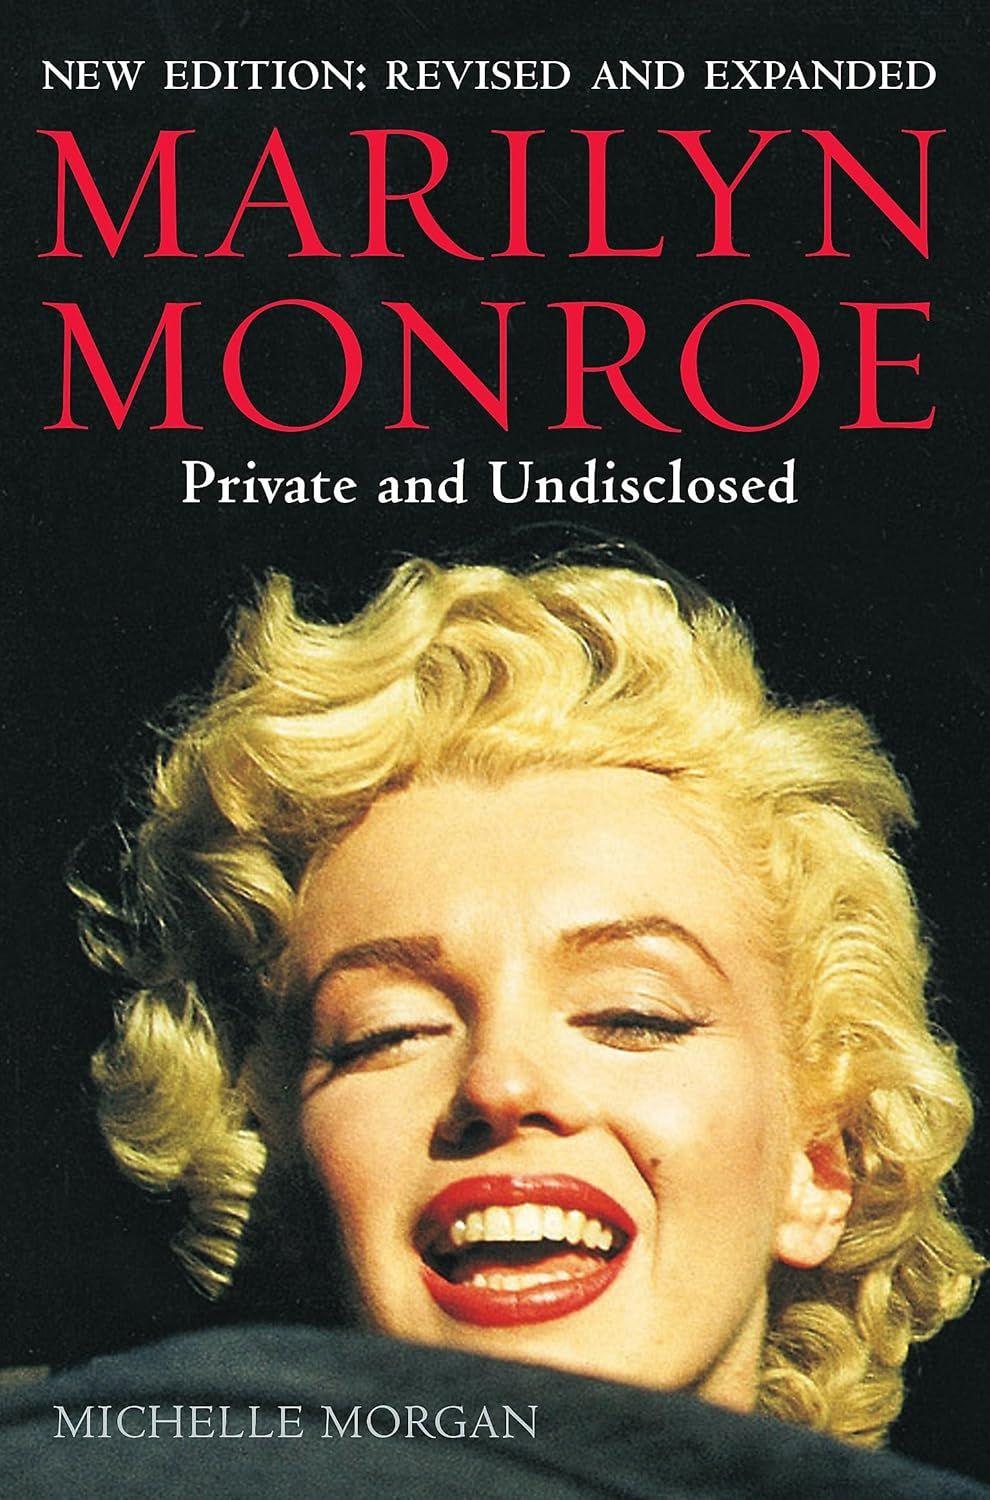 Brief History of Marilyn Monroe